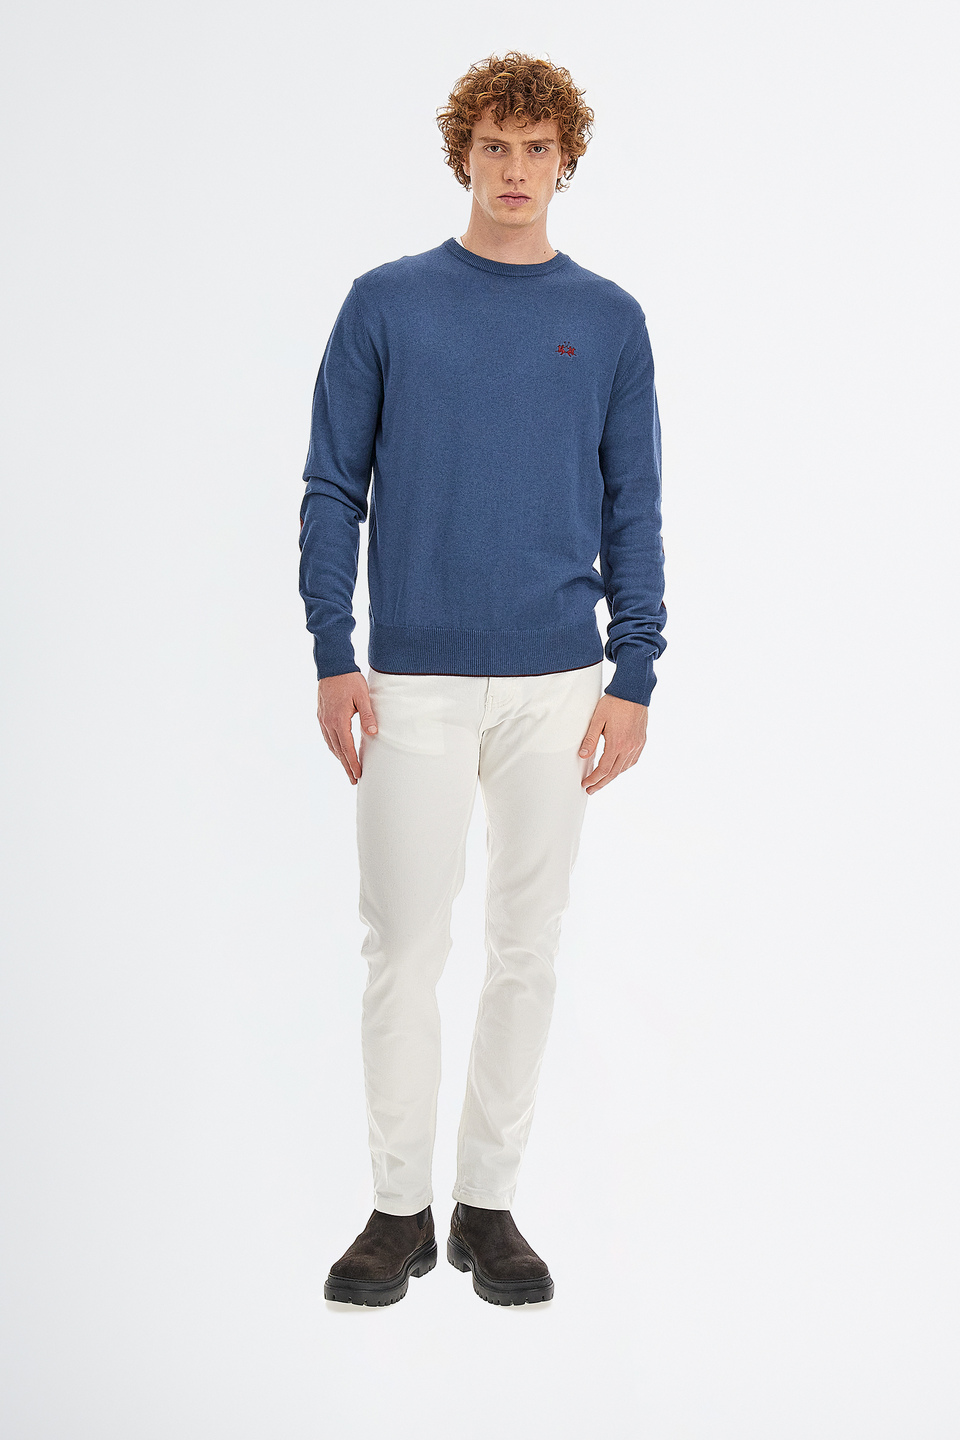 Pantalón de hombre en algodón elástico regular fit modelo chino | La Martina - Official Online Shop